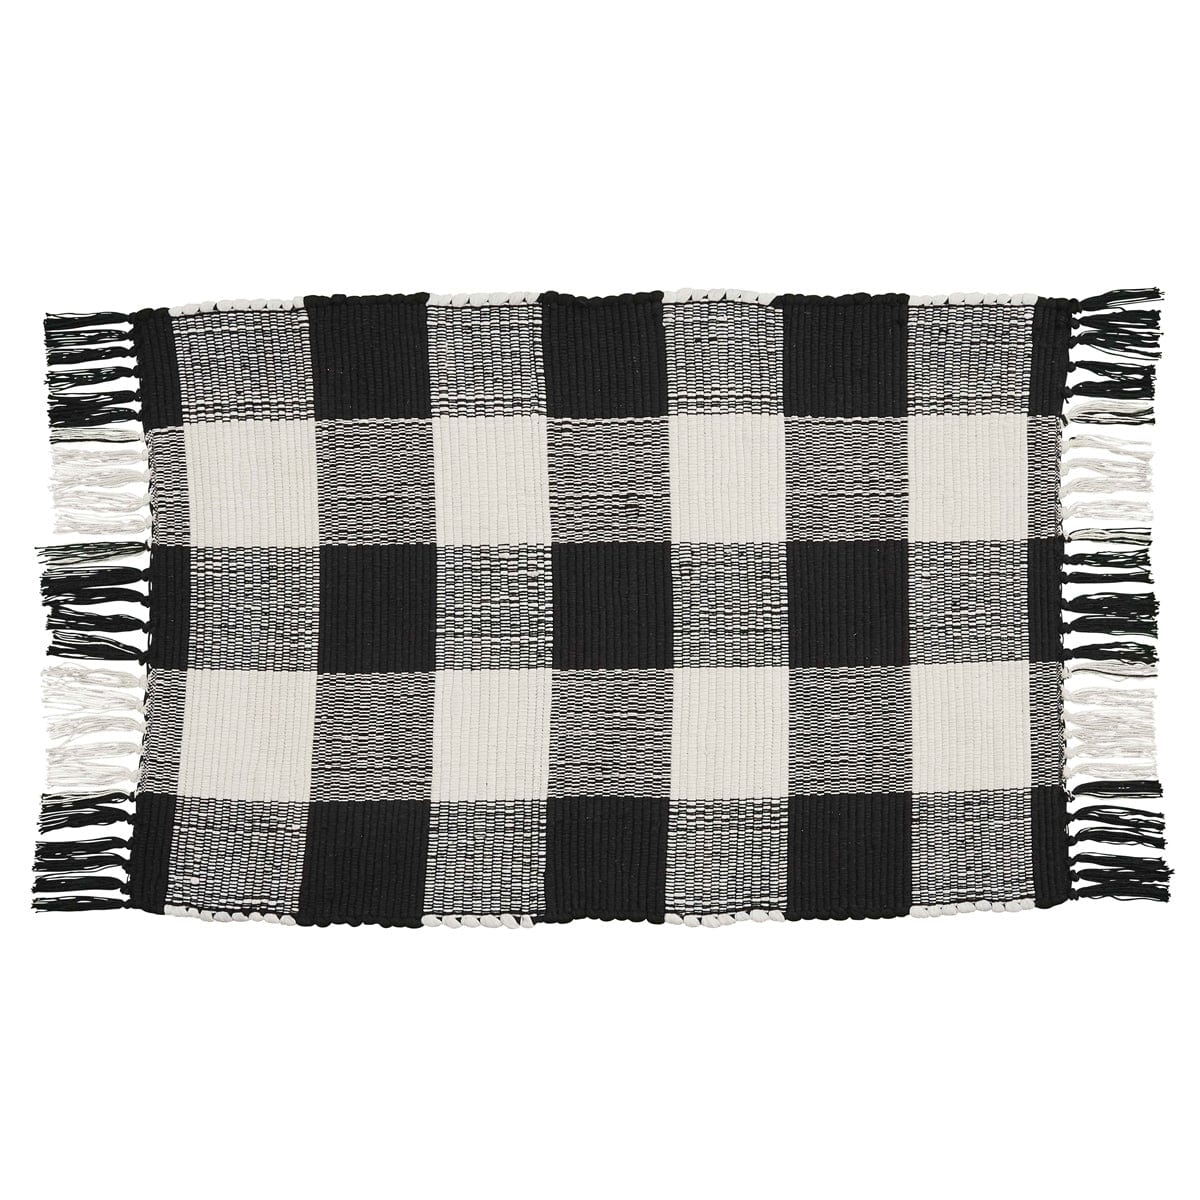 Wicklow Check in Black & Cream Woven rug 36" x 60" rectangle-Park Designs-The Village Merchant